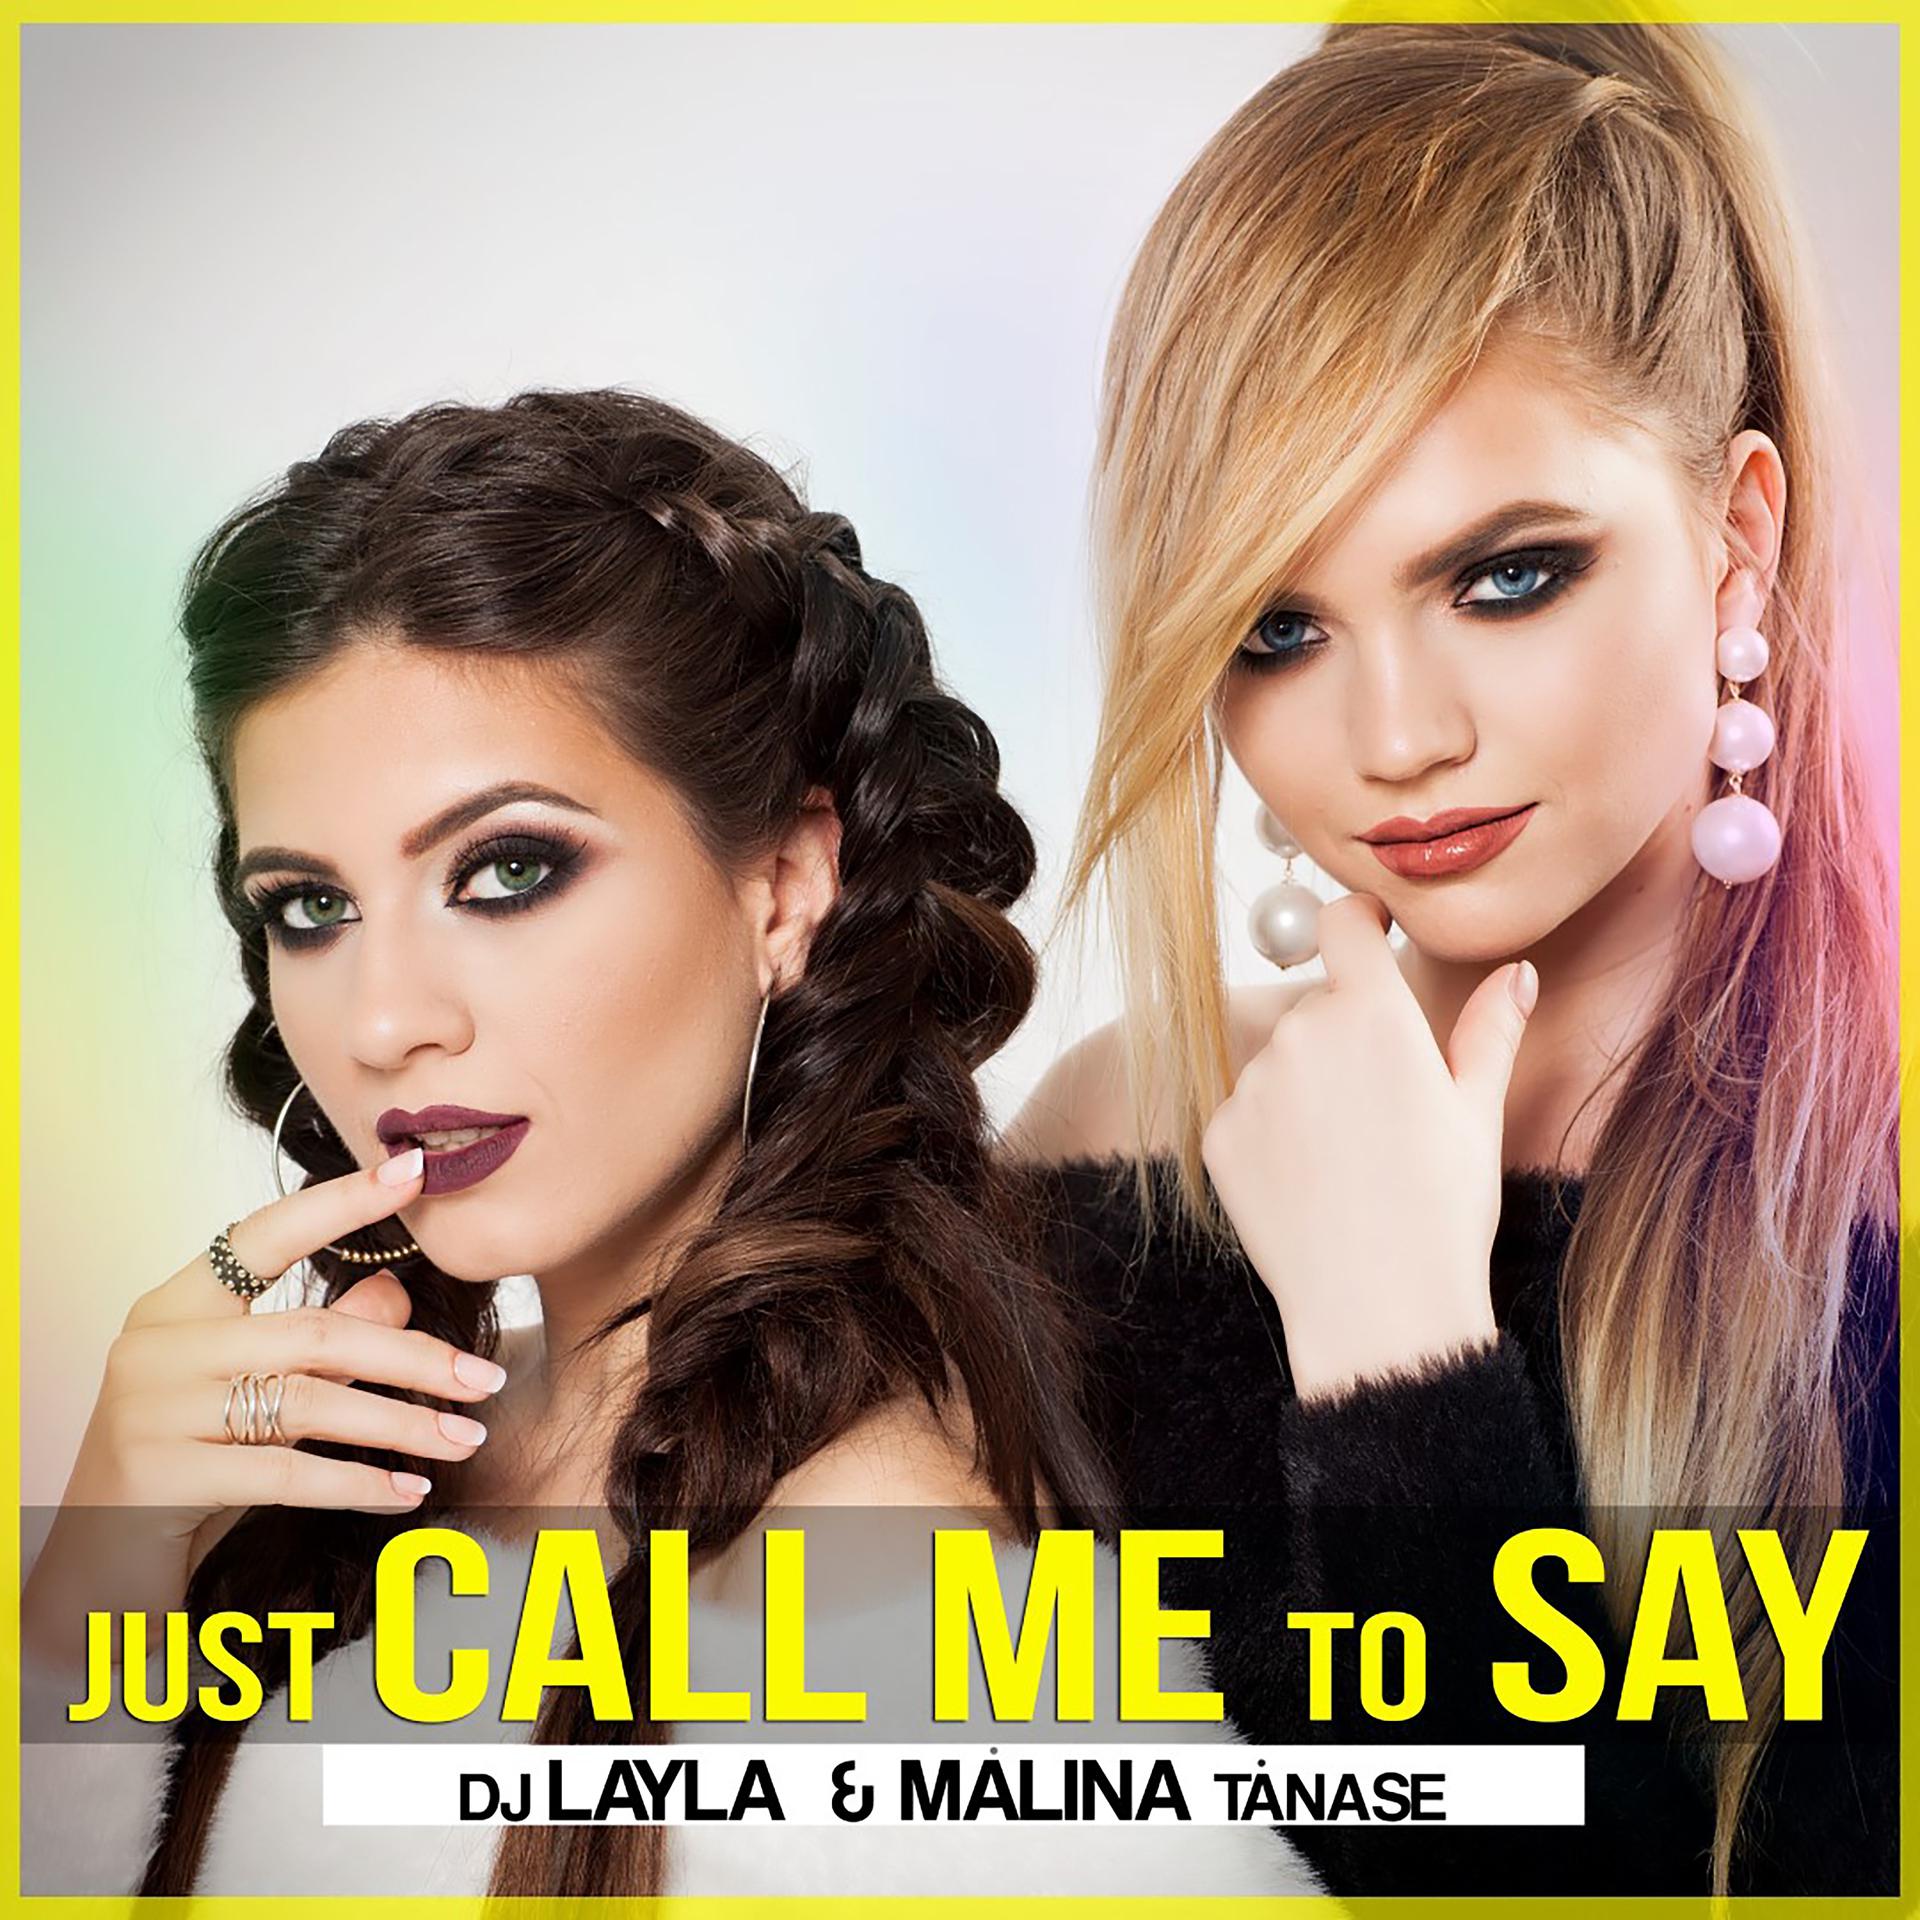 Постер к треку Dj Layla, Malina Tanase - Just call me to say (naBBoo Remix)